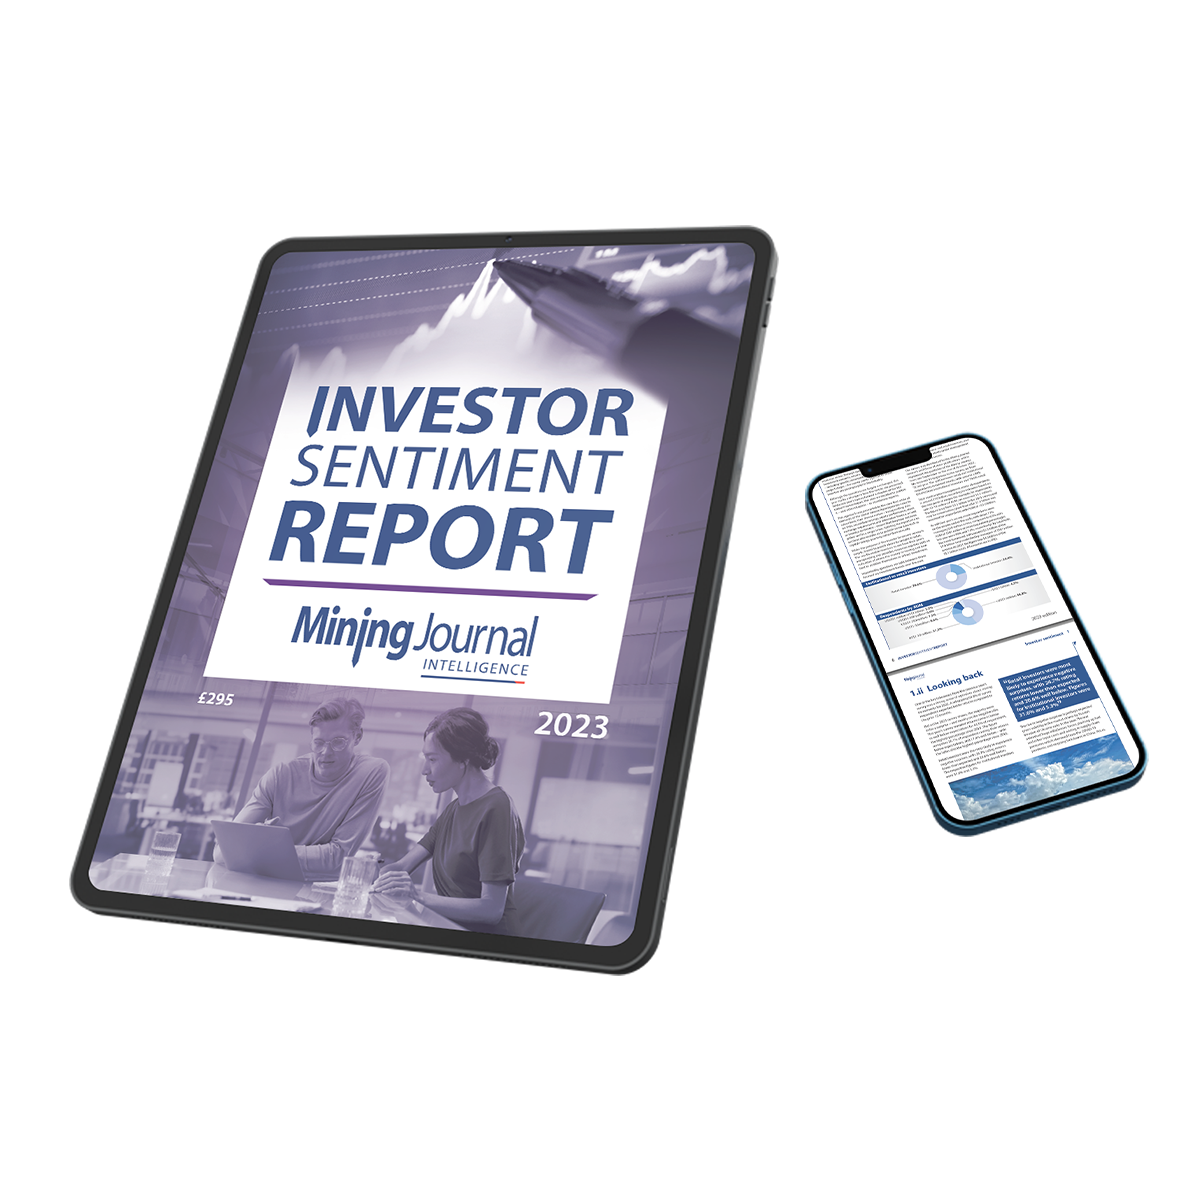 Mockup-cluster_MJI-Investor-Sentiment-Report-2023_31-08-23